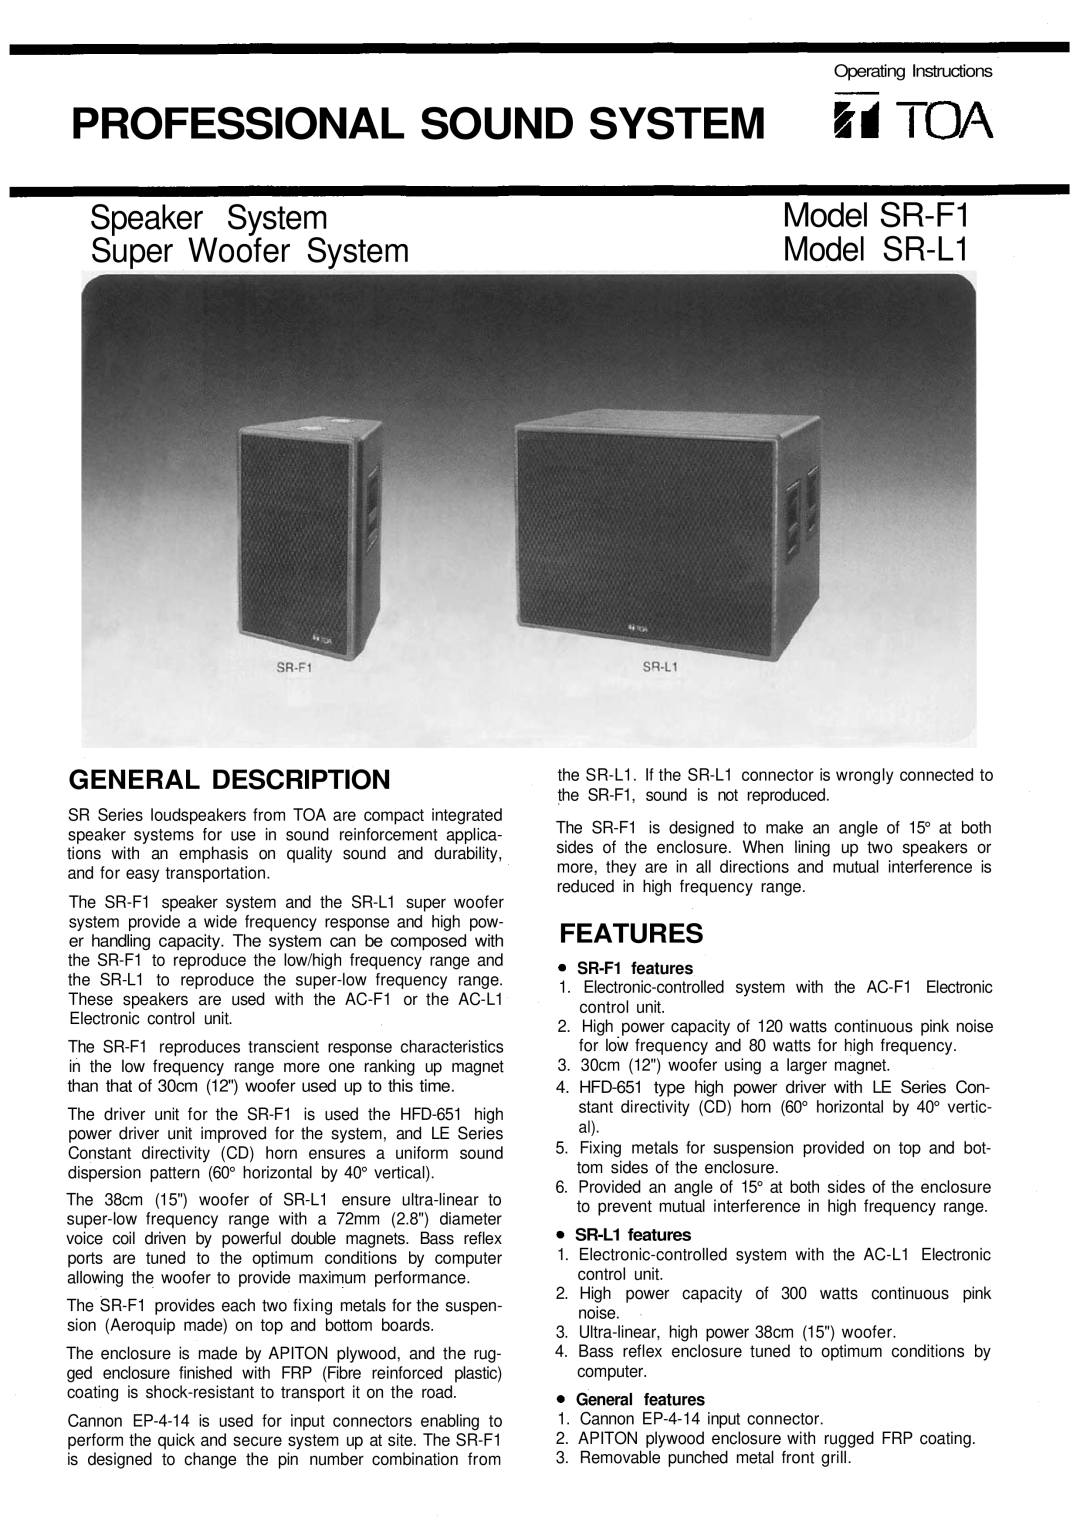 Vizio manual Professional Sound System, Speaker System, Super Woofer System, Model SR-L1, Model SR-F1, Features 